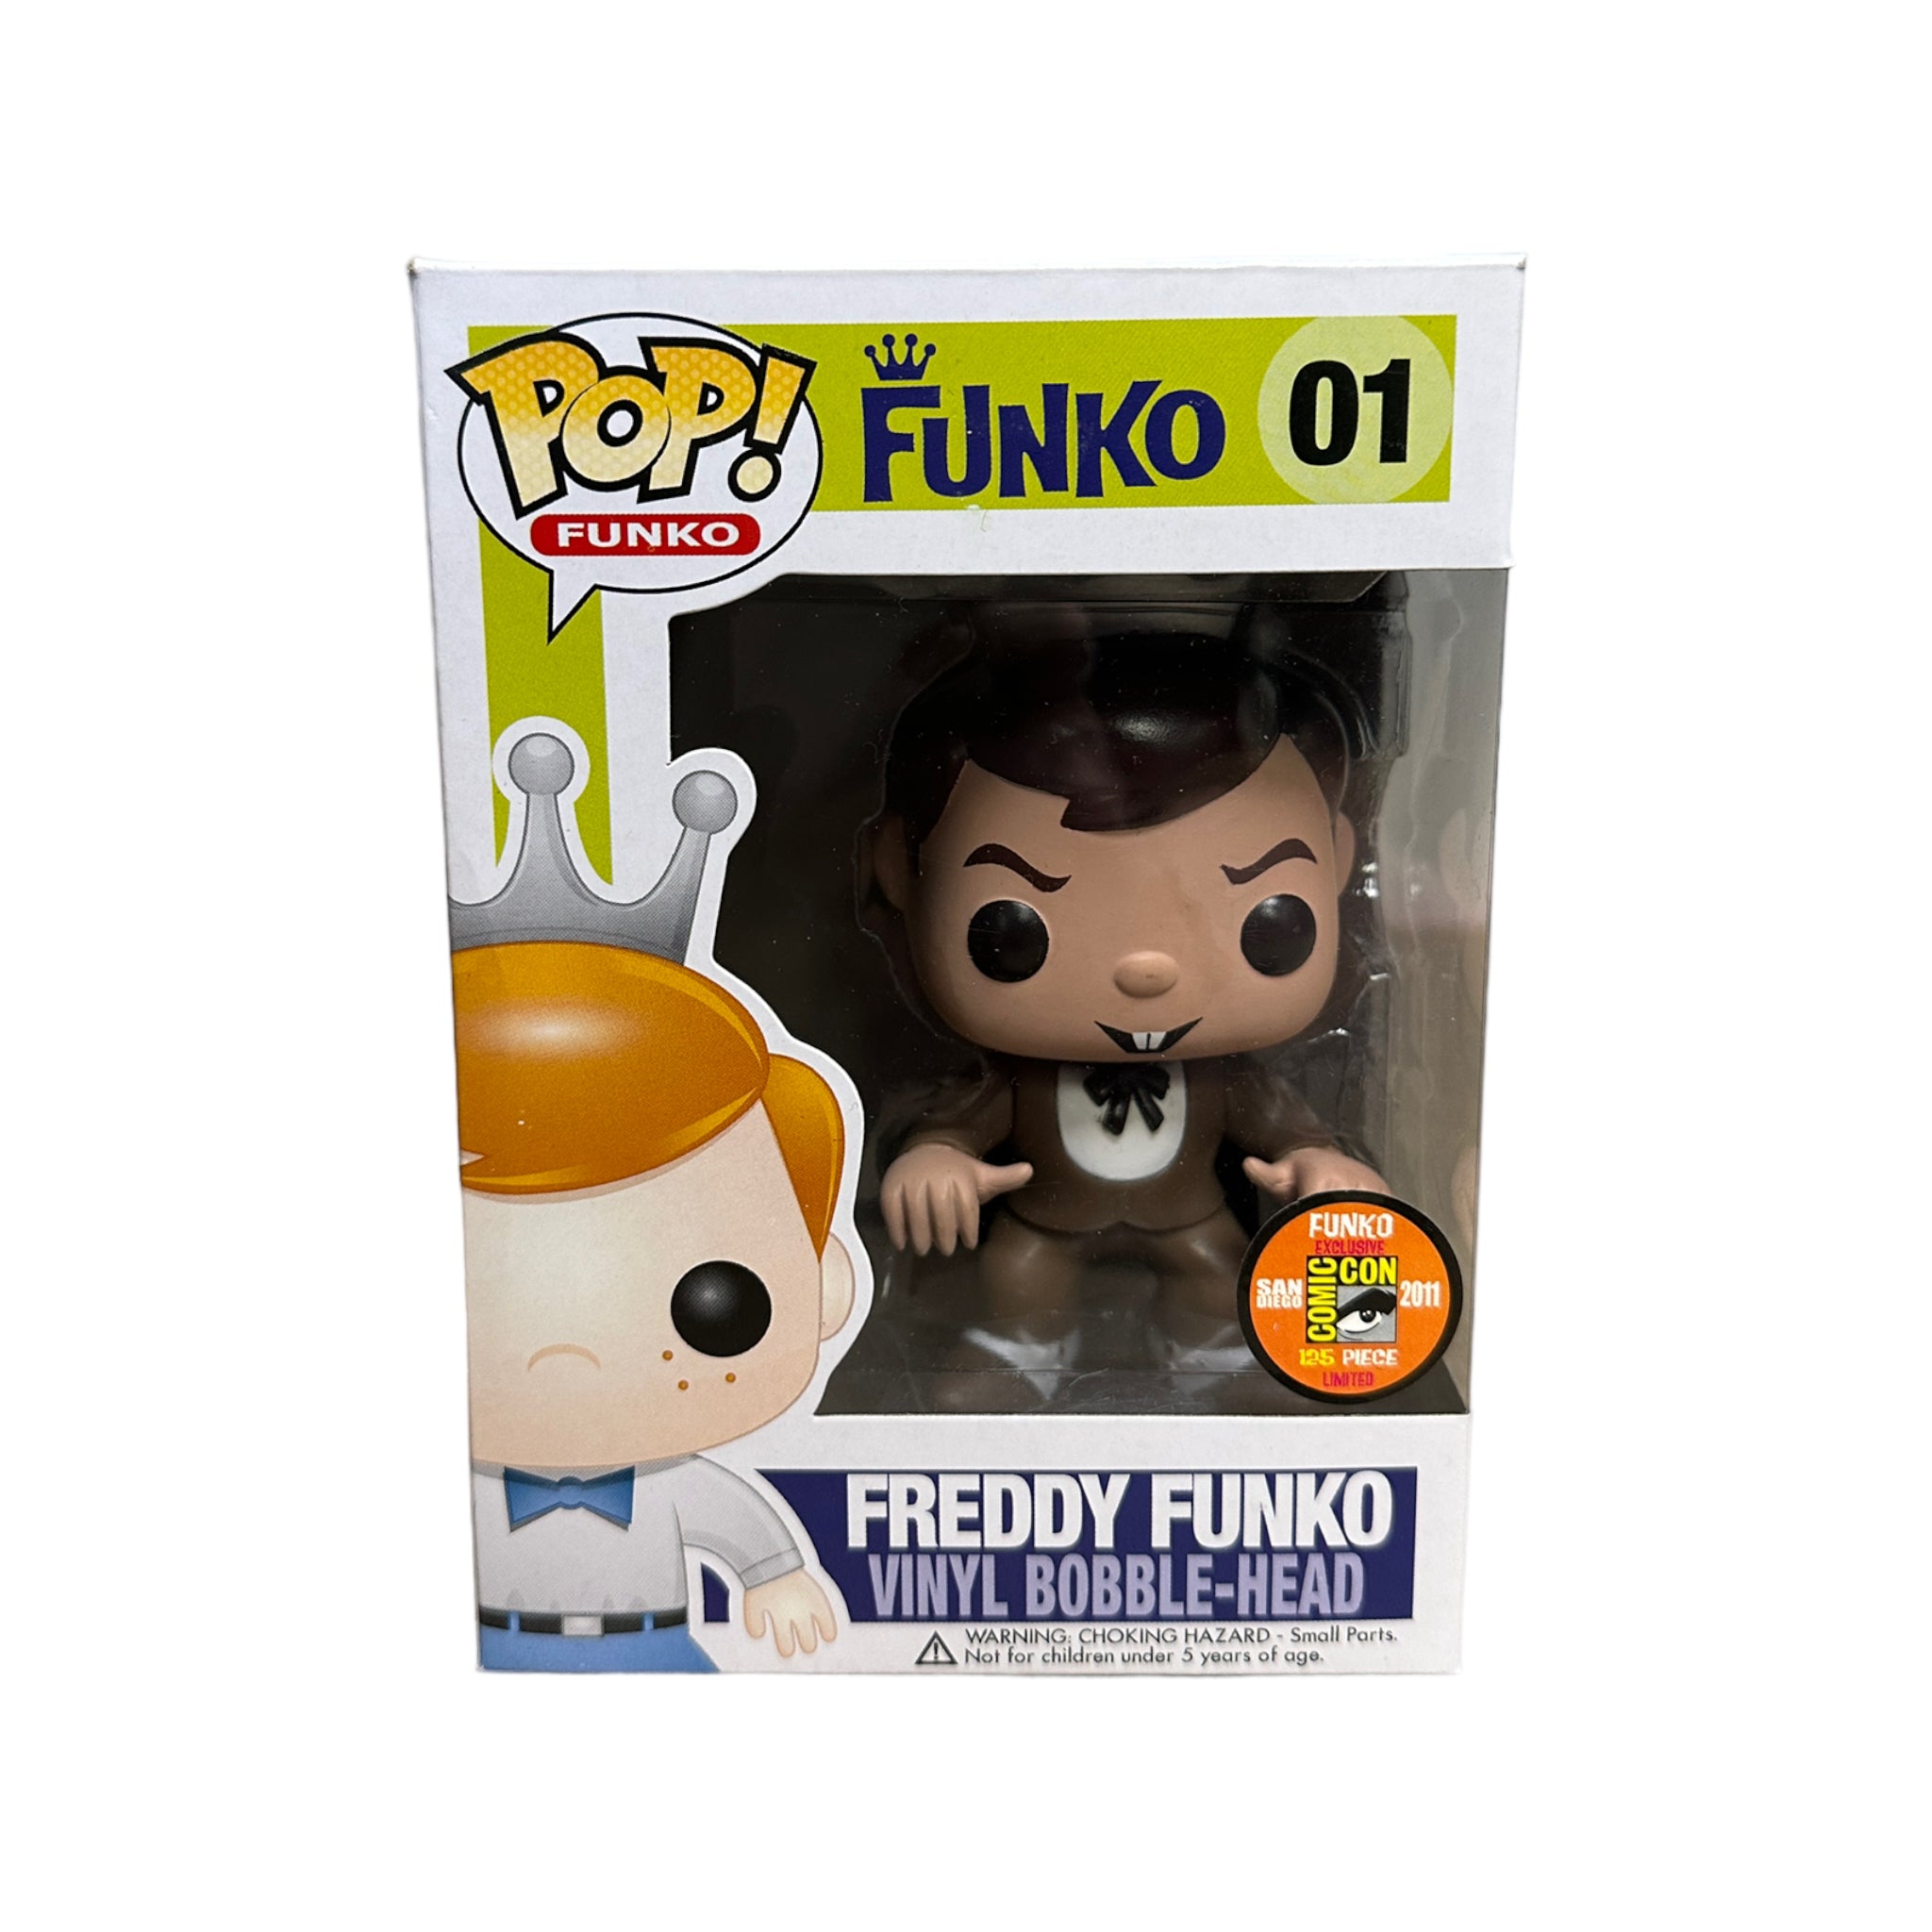 Freddy Funko as Count Chocula #02 Funko Pop! - SDCC 2011 Exclusive LE125 Pcs - Condition 8/10